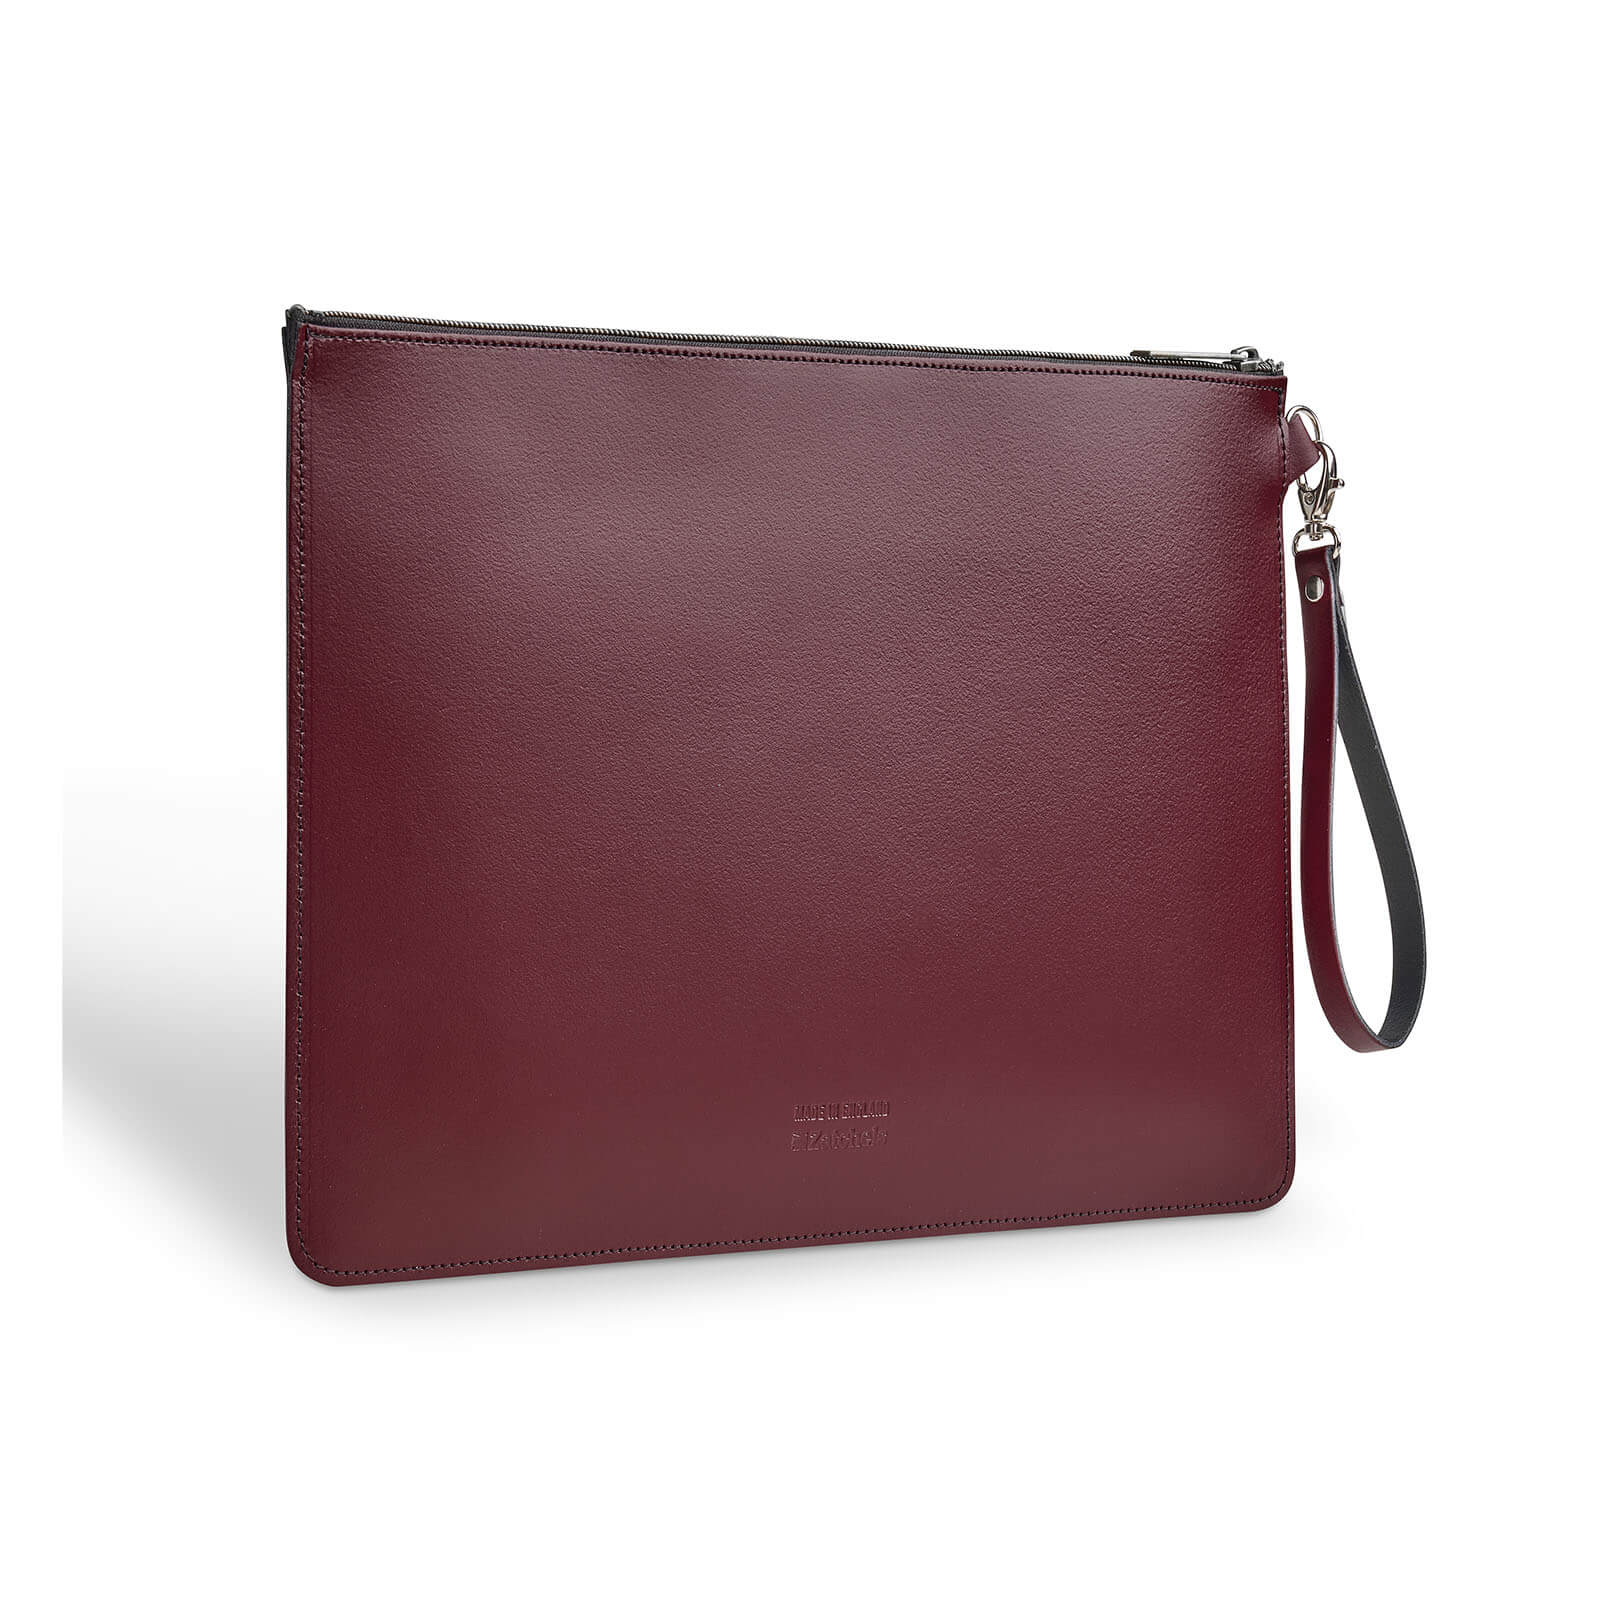 Handmade Leather Folio Case - Marsala Red - Large